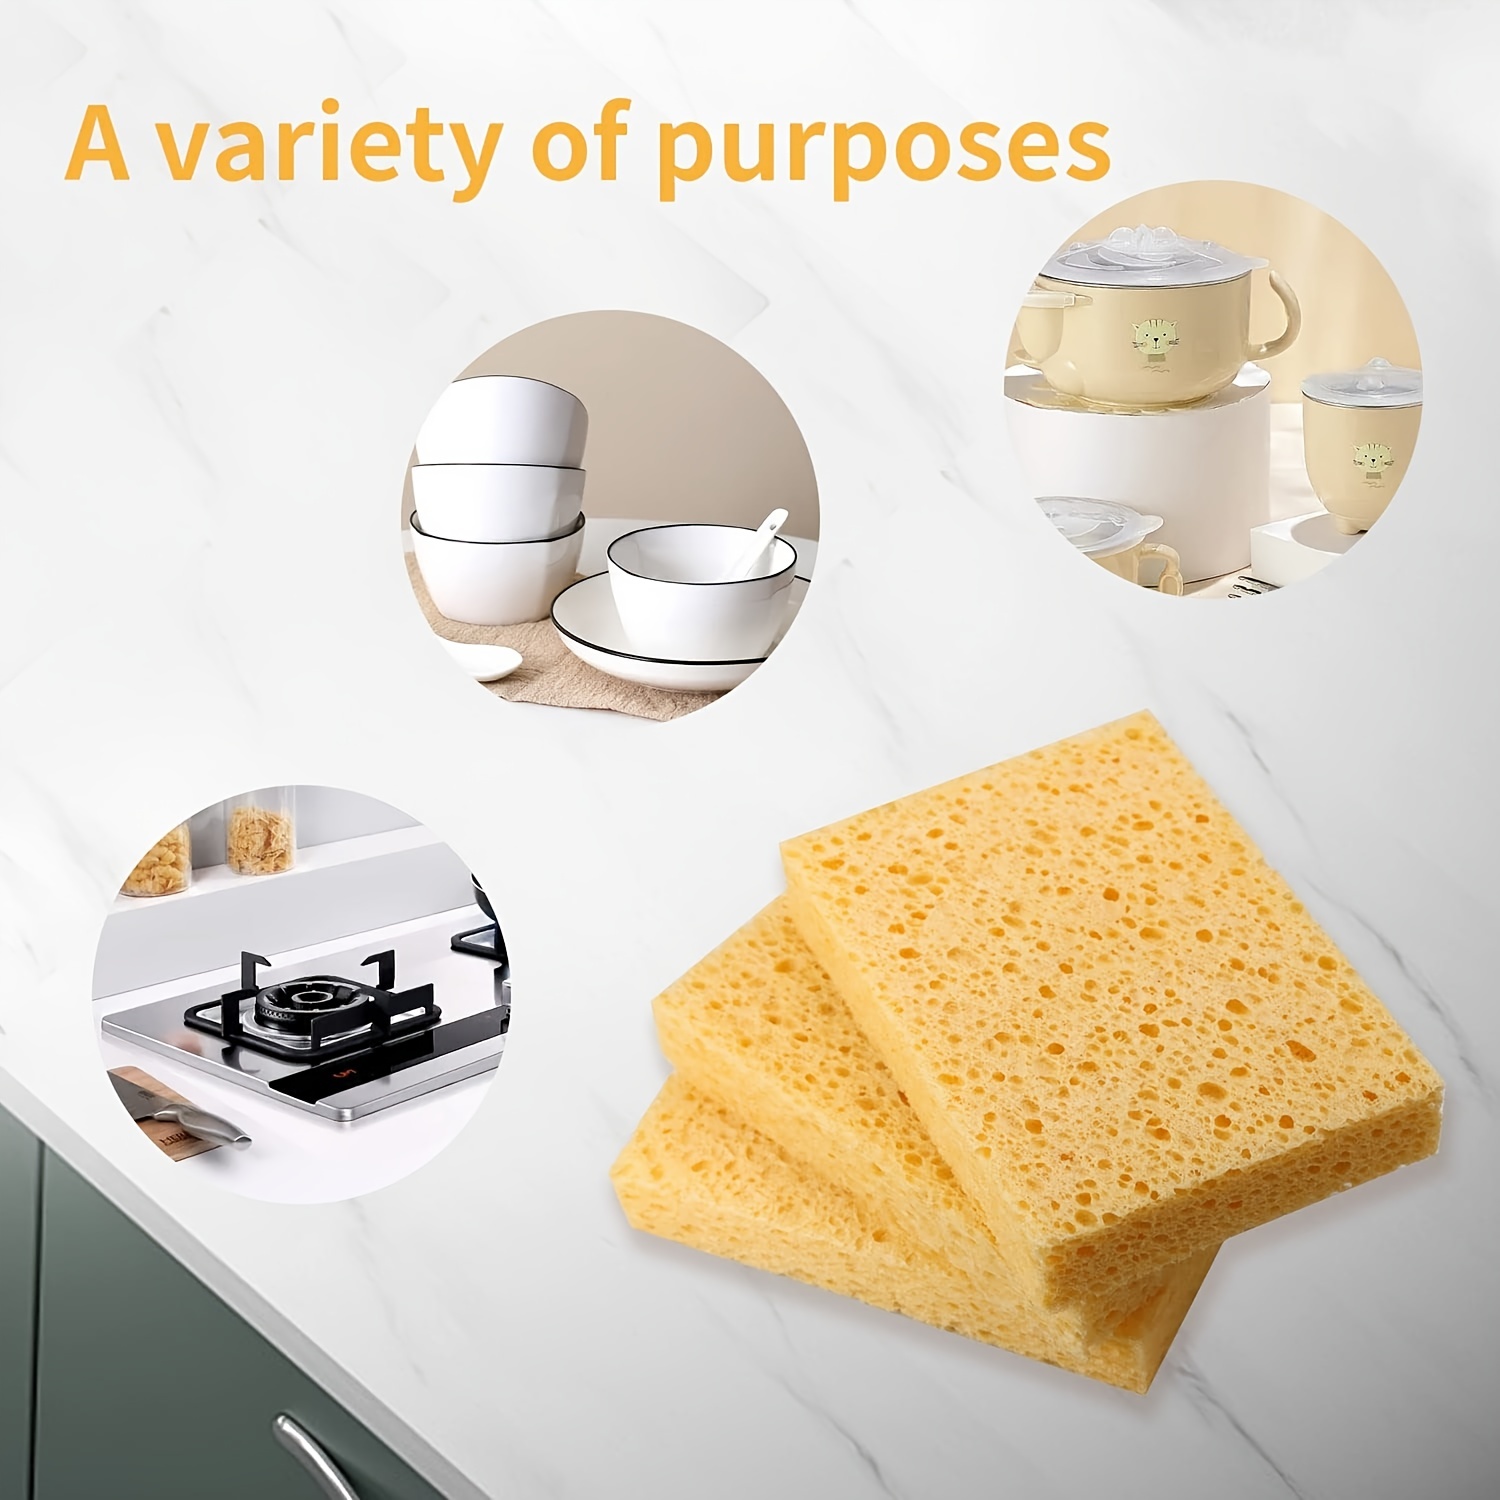 1Pcs Dish Sponge For Kitchen Heavy Duty Scrub Sponges ual-Sided